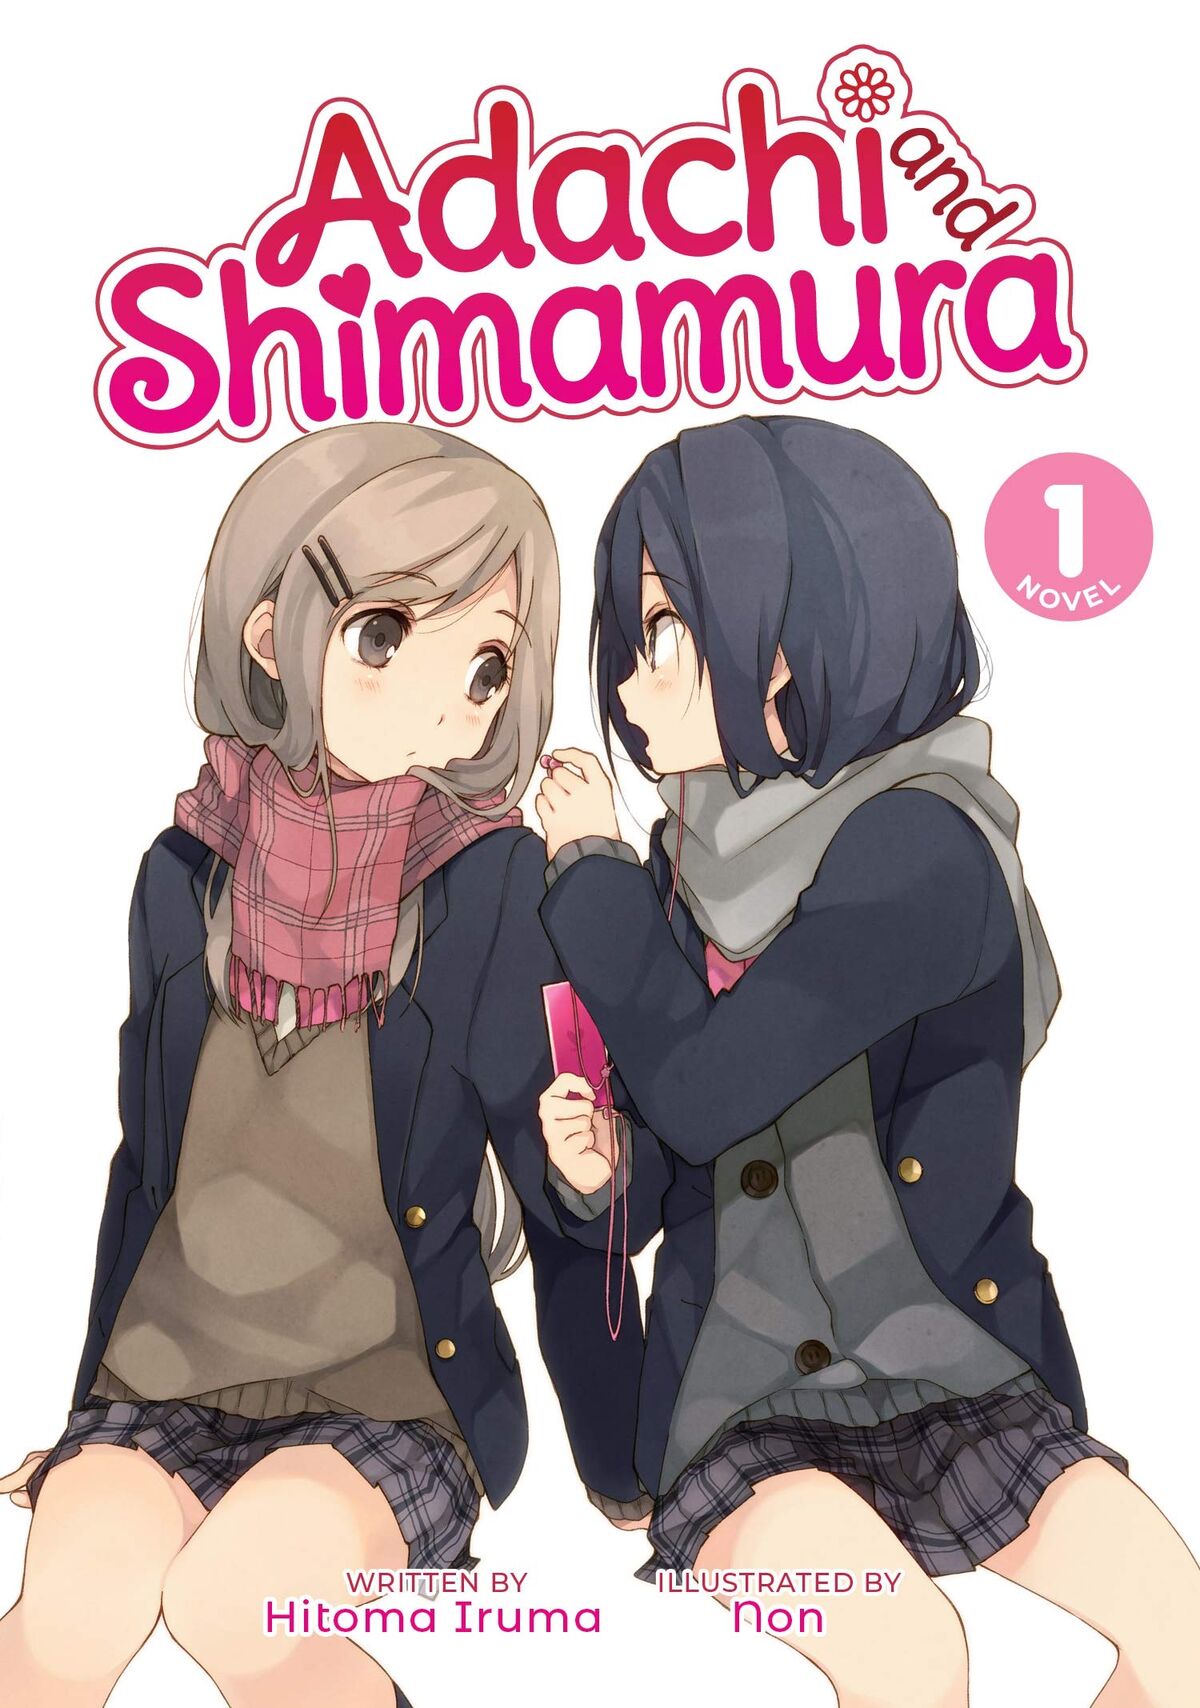 Adachi & Shimamura Manga Volume 1 #Manga #GL - Depop